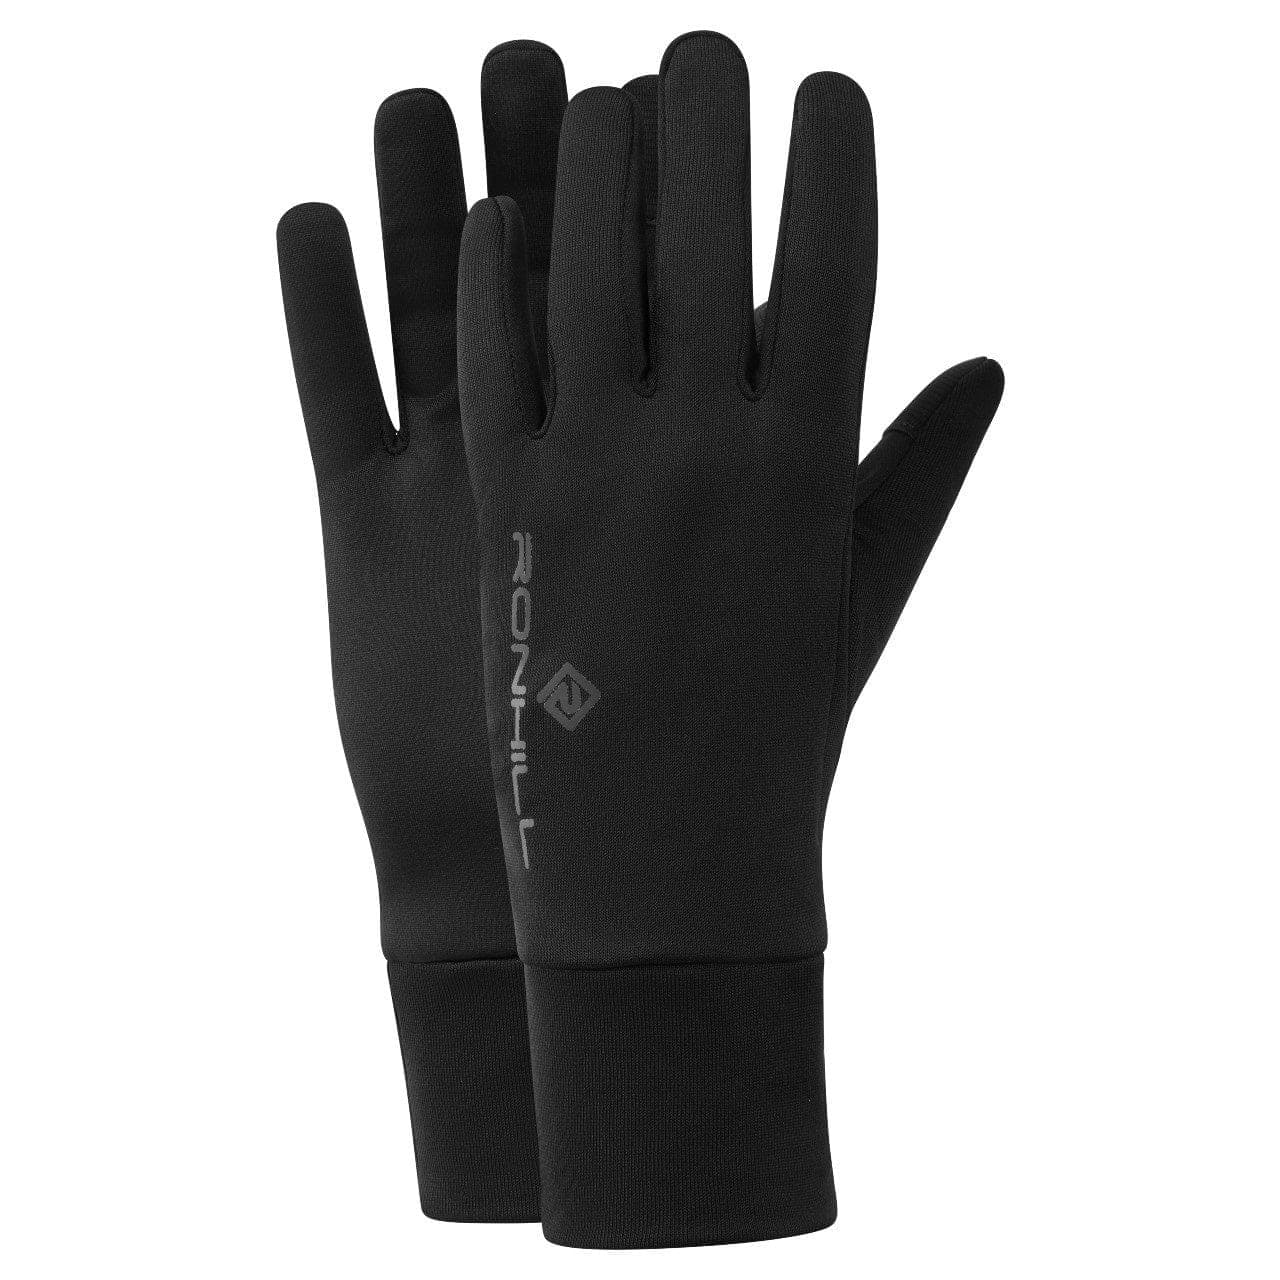 Ronhill Prism Glove - Black/Charcoal